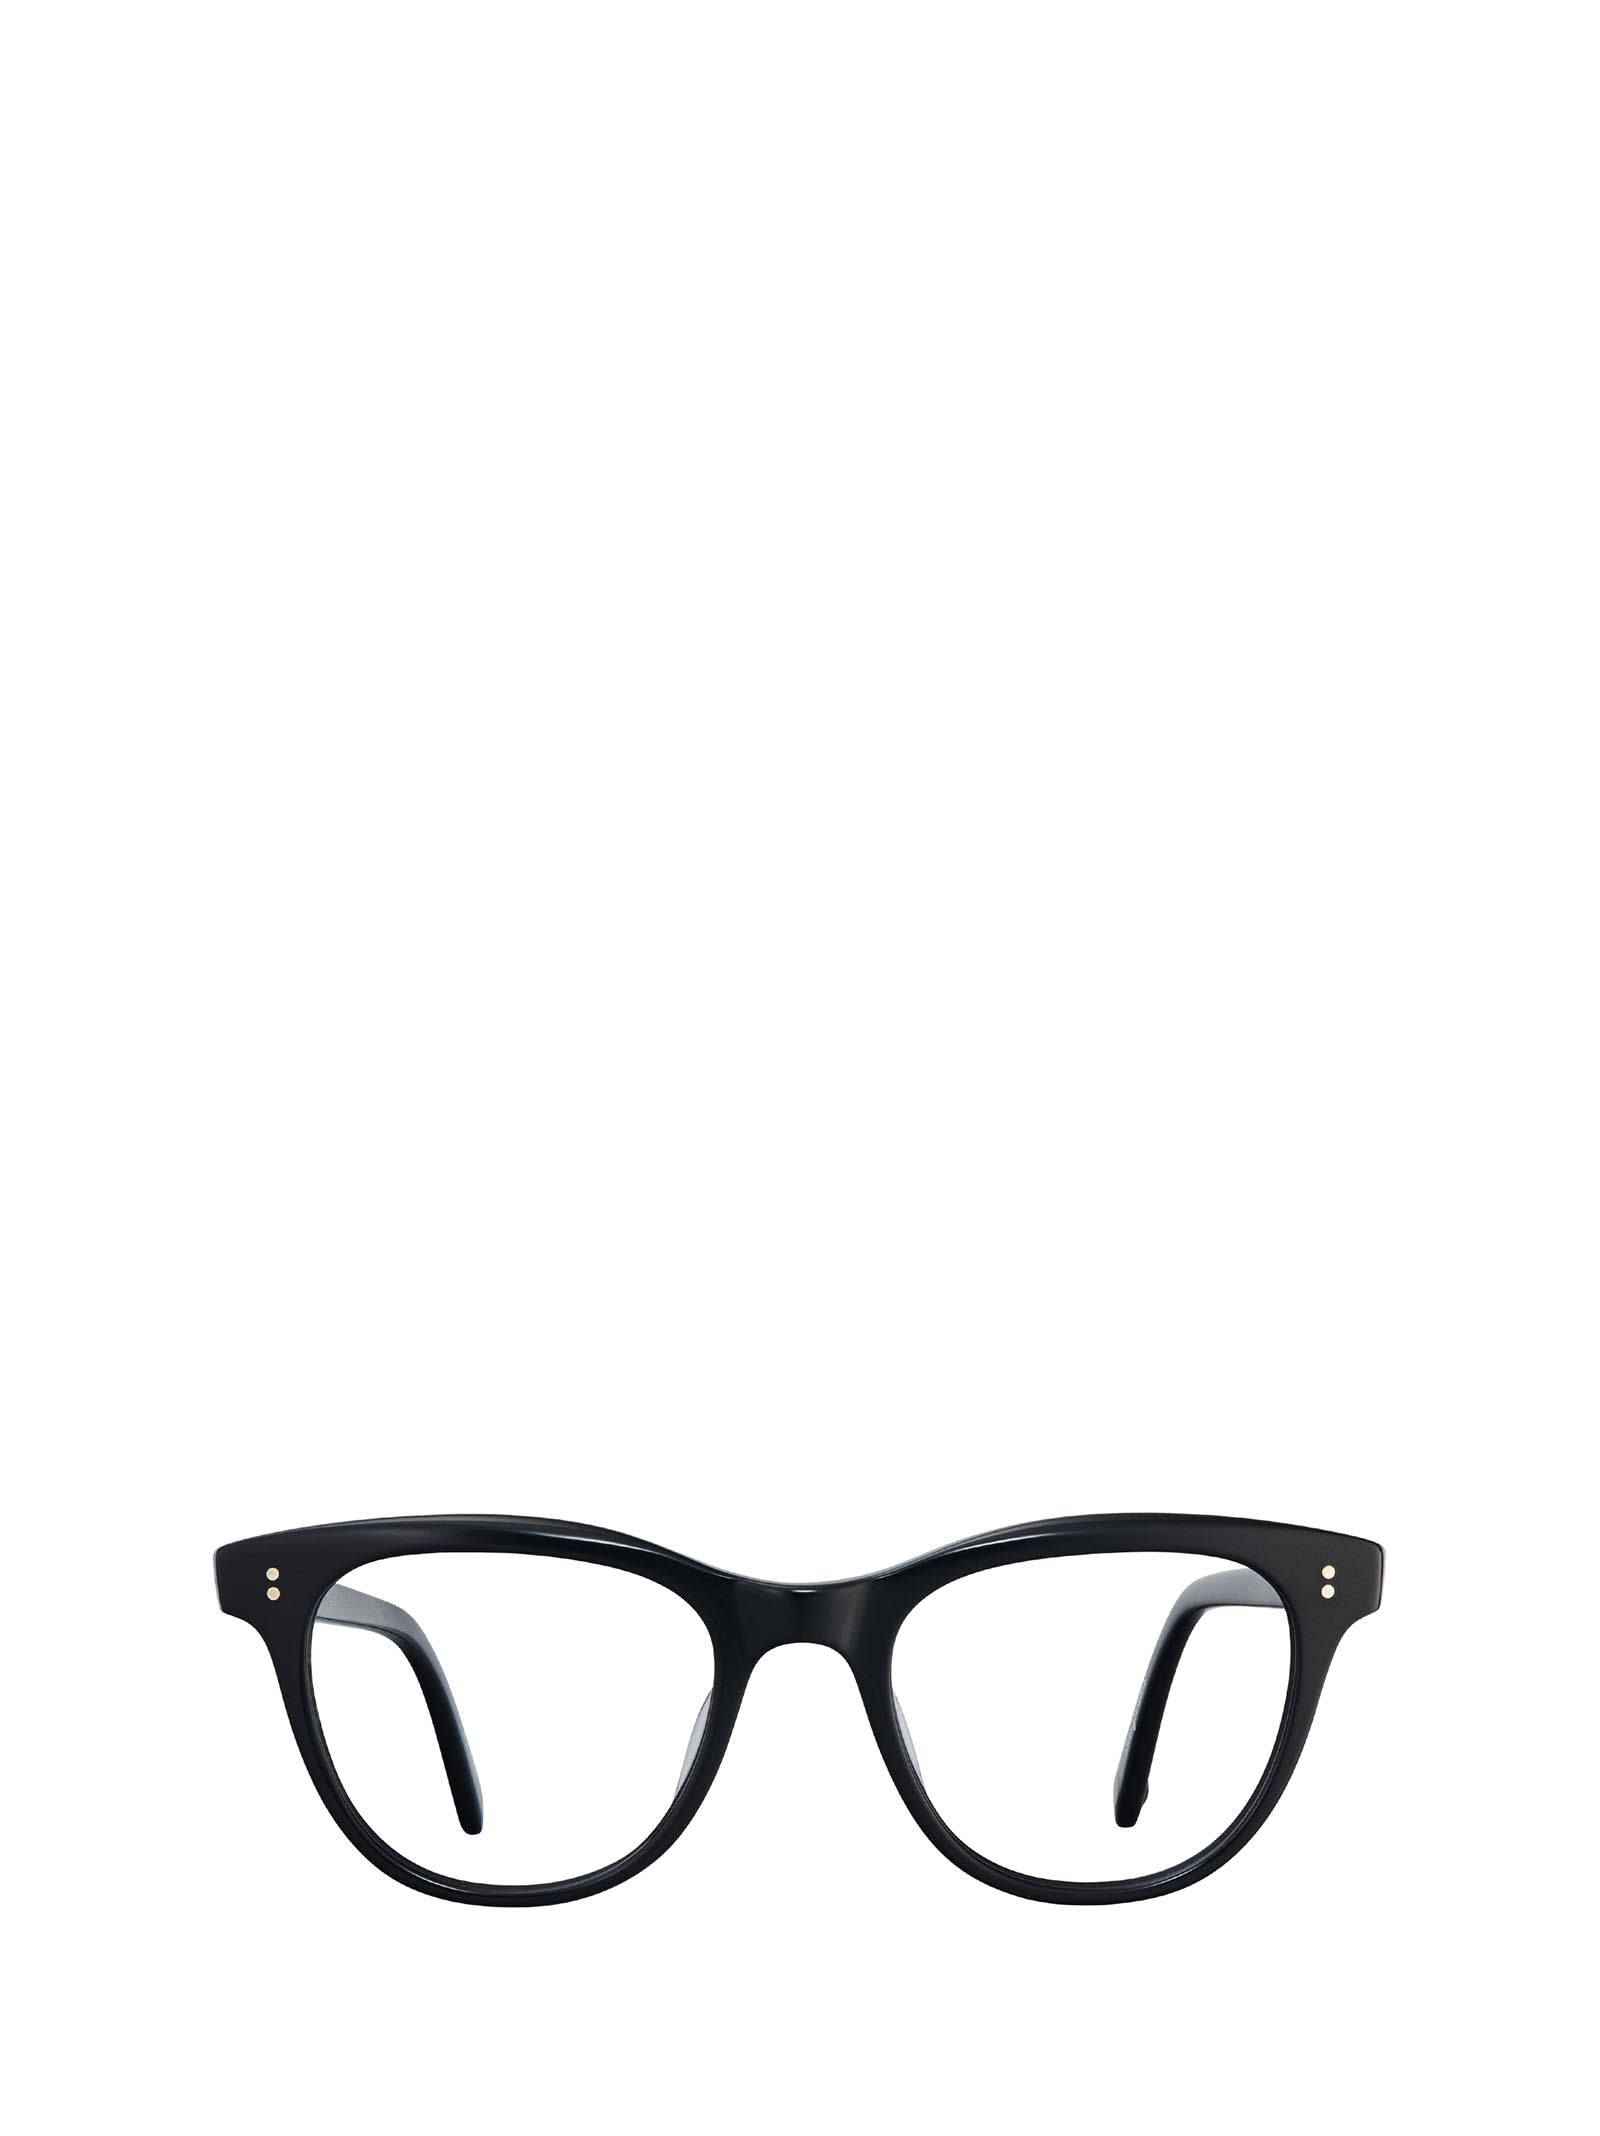 Loyola Black Glasses